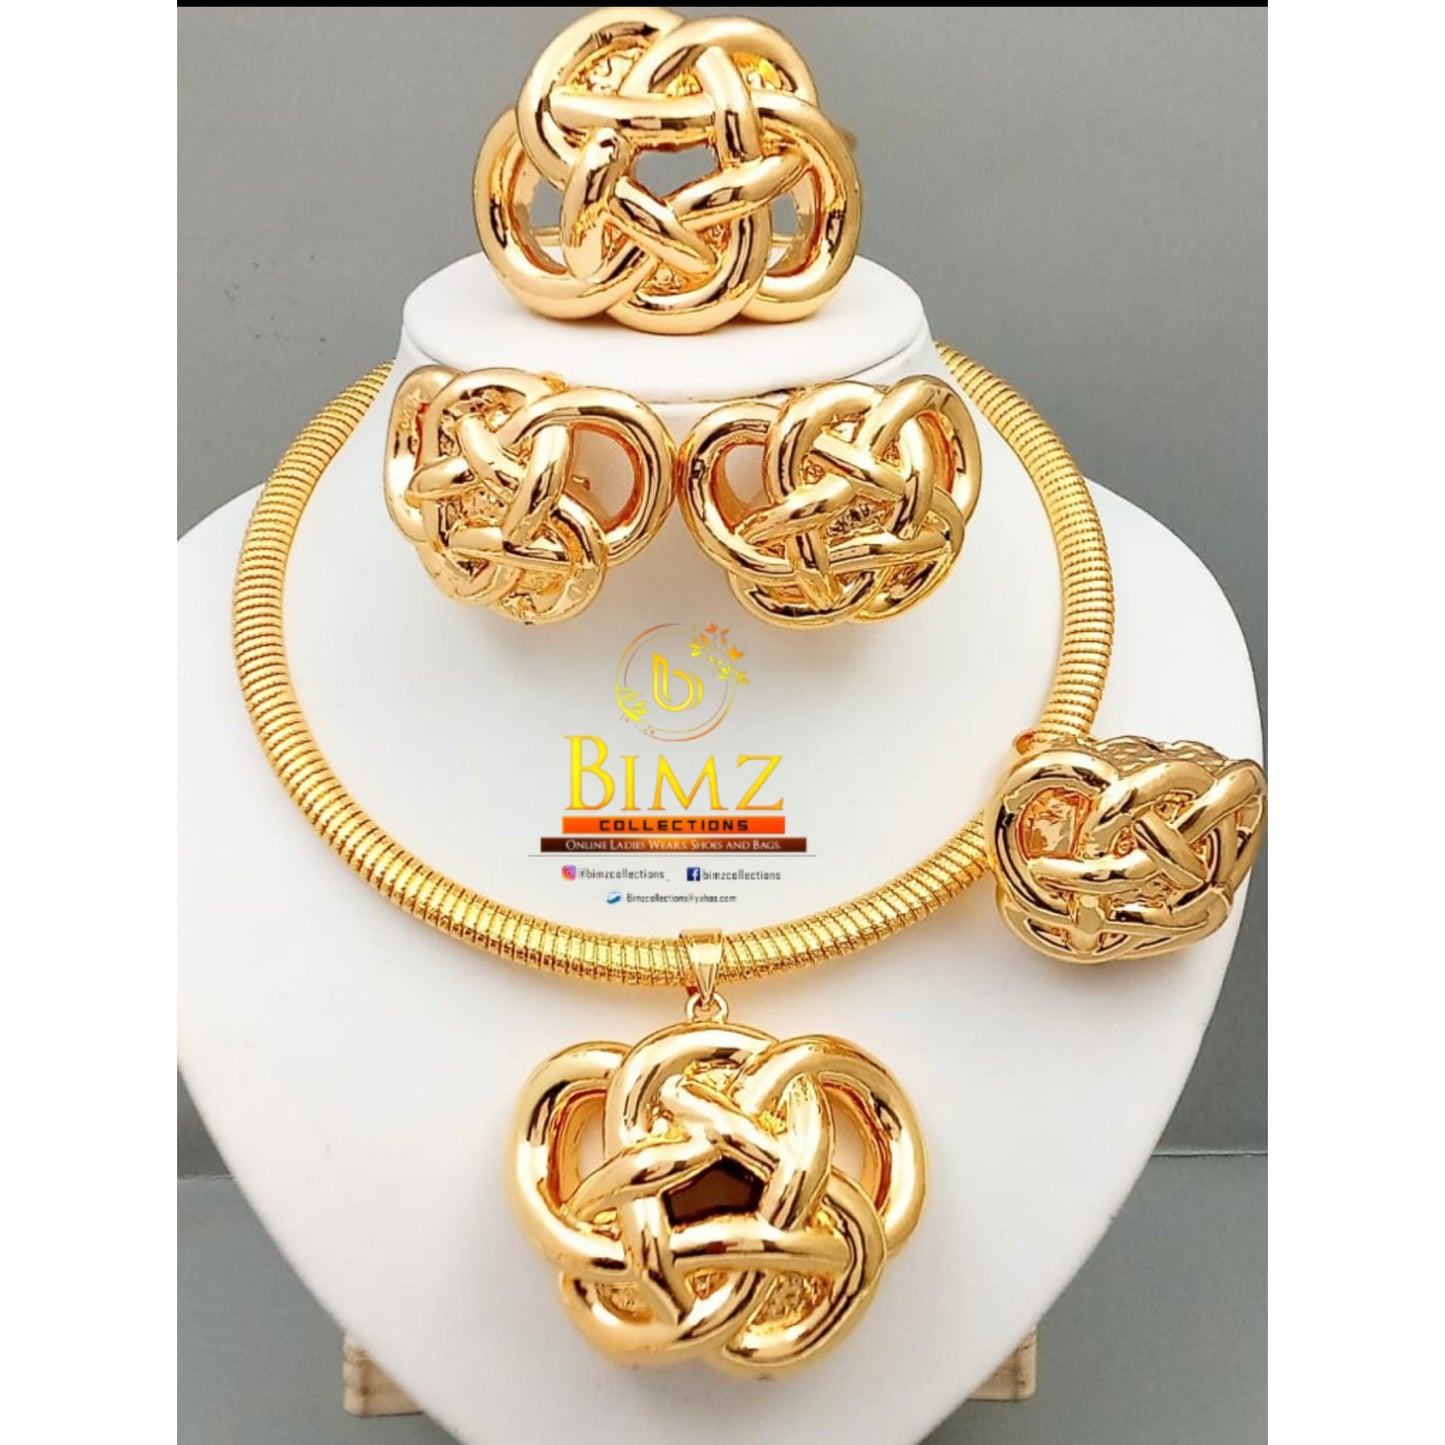 Pretzel Design Gold Jewelry 6 in 1 Set